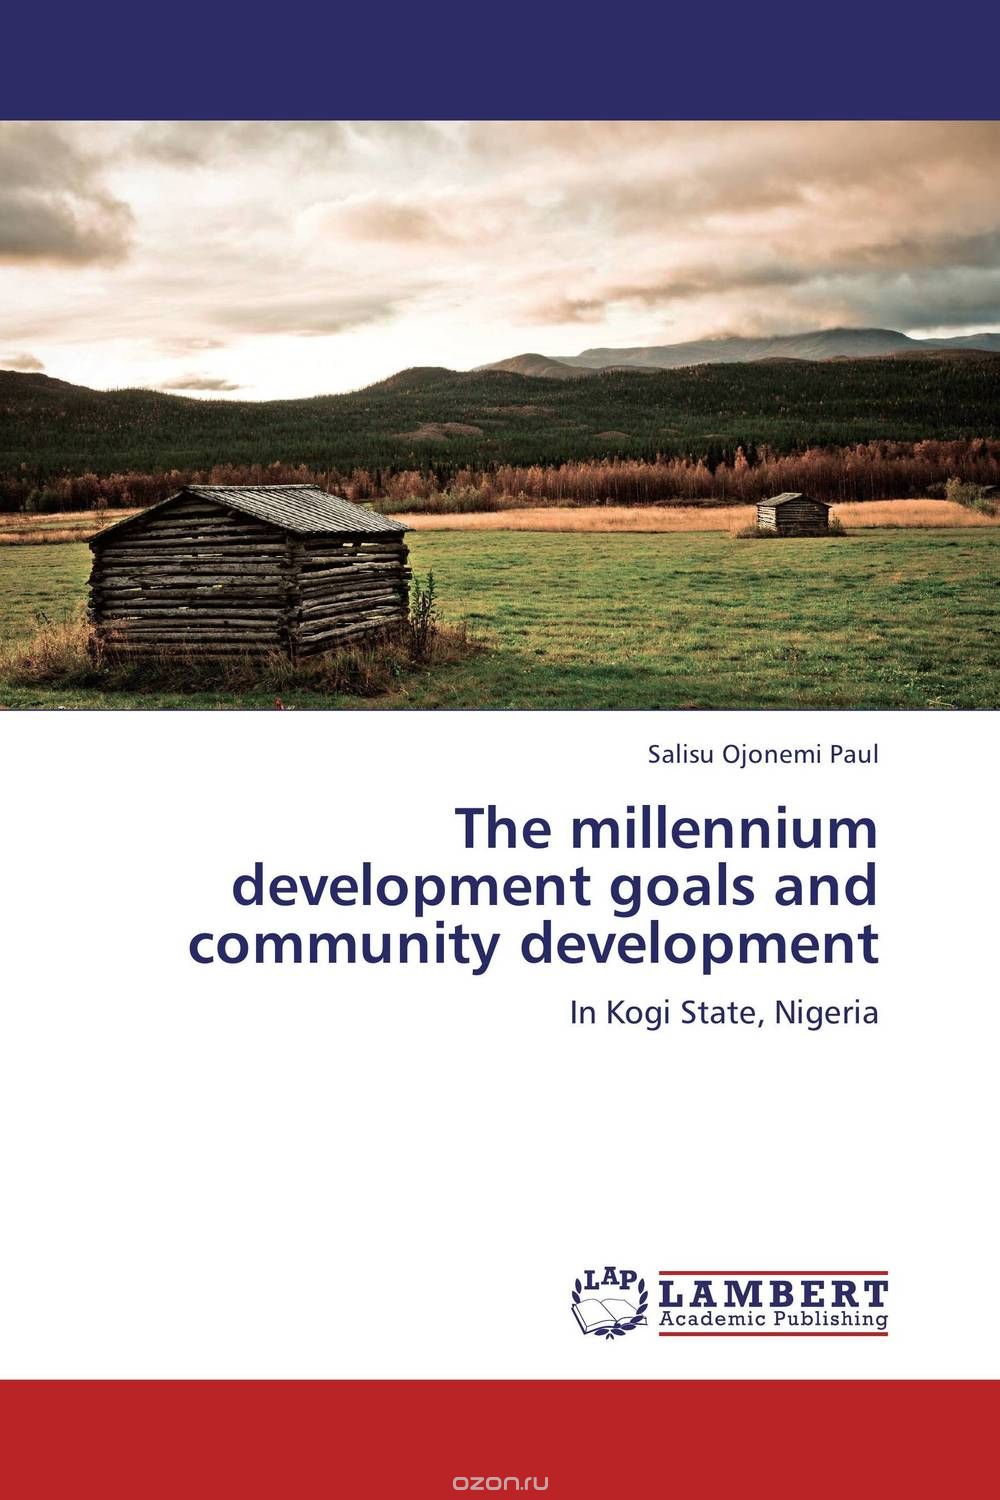 The millennium development goals and community development